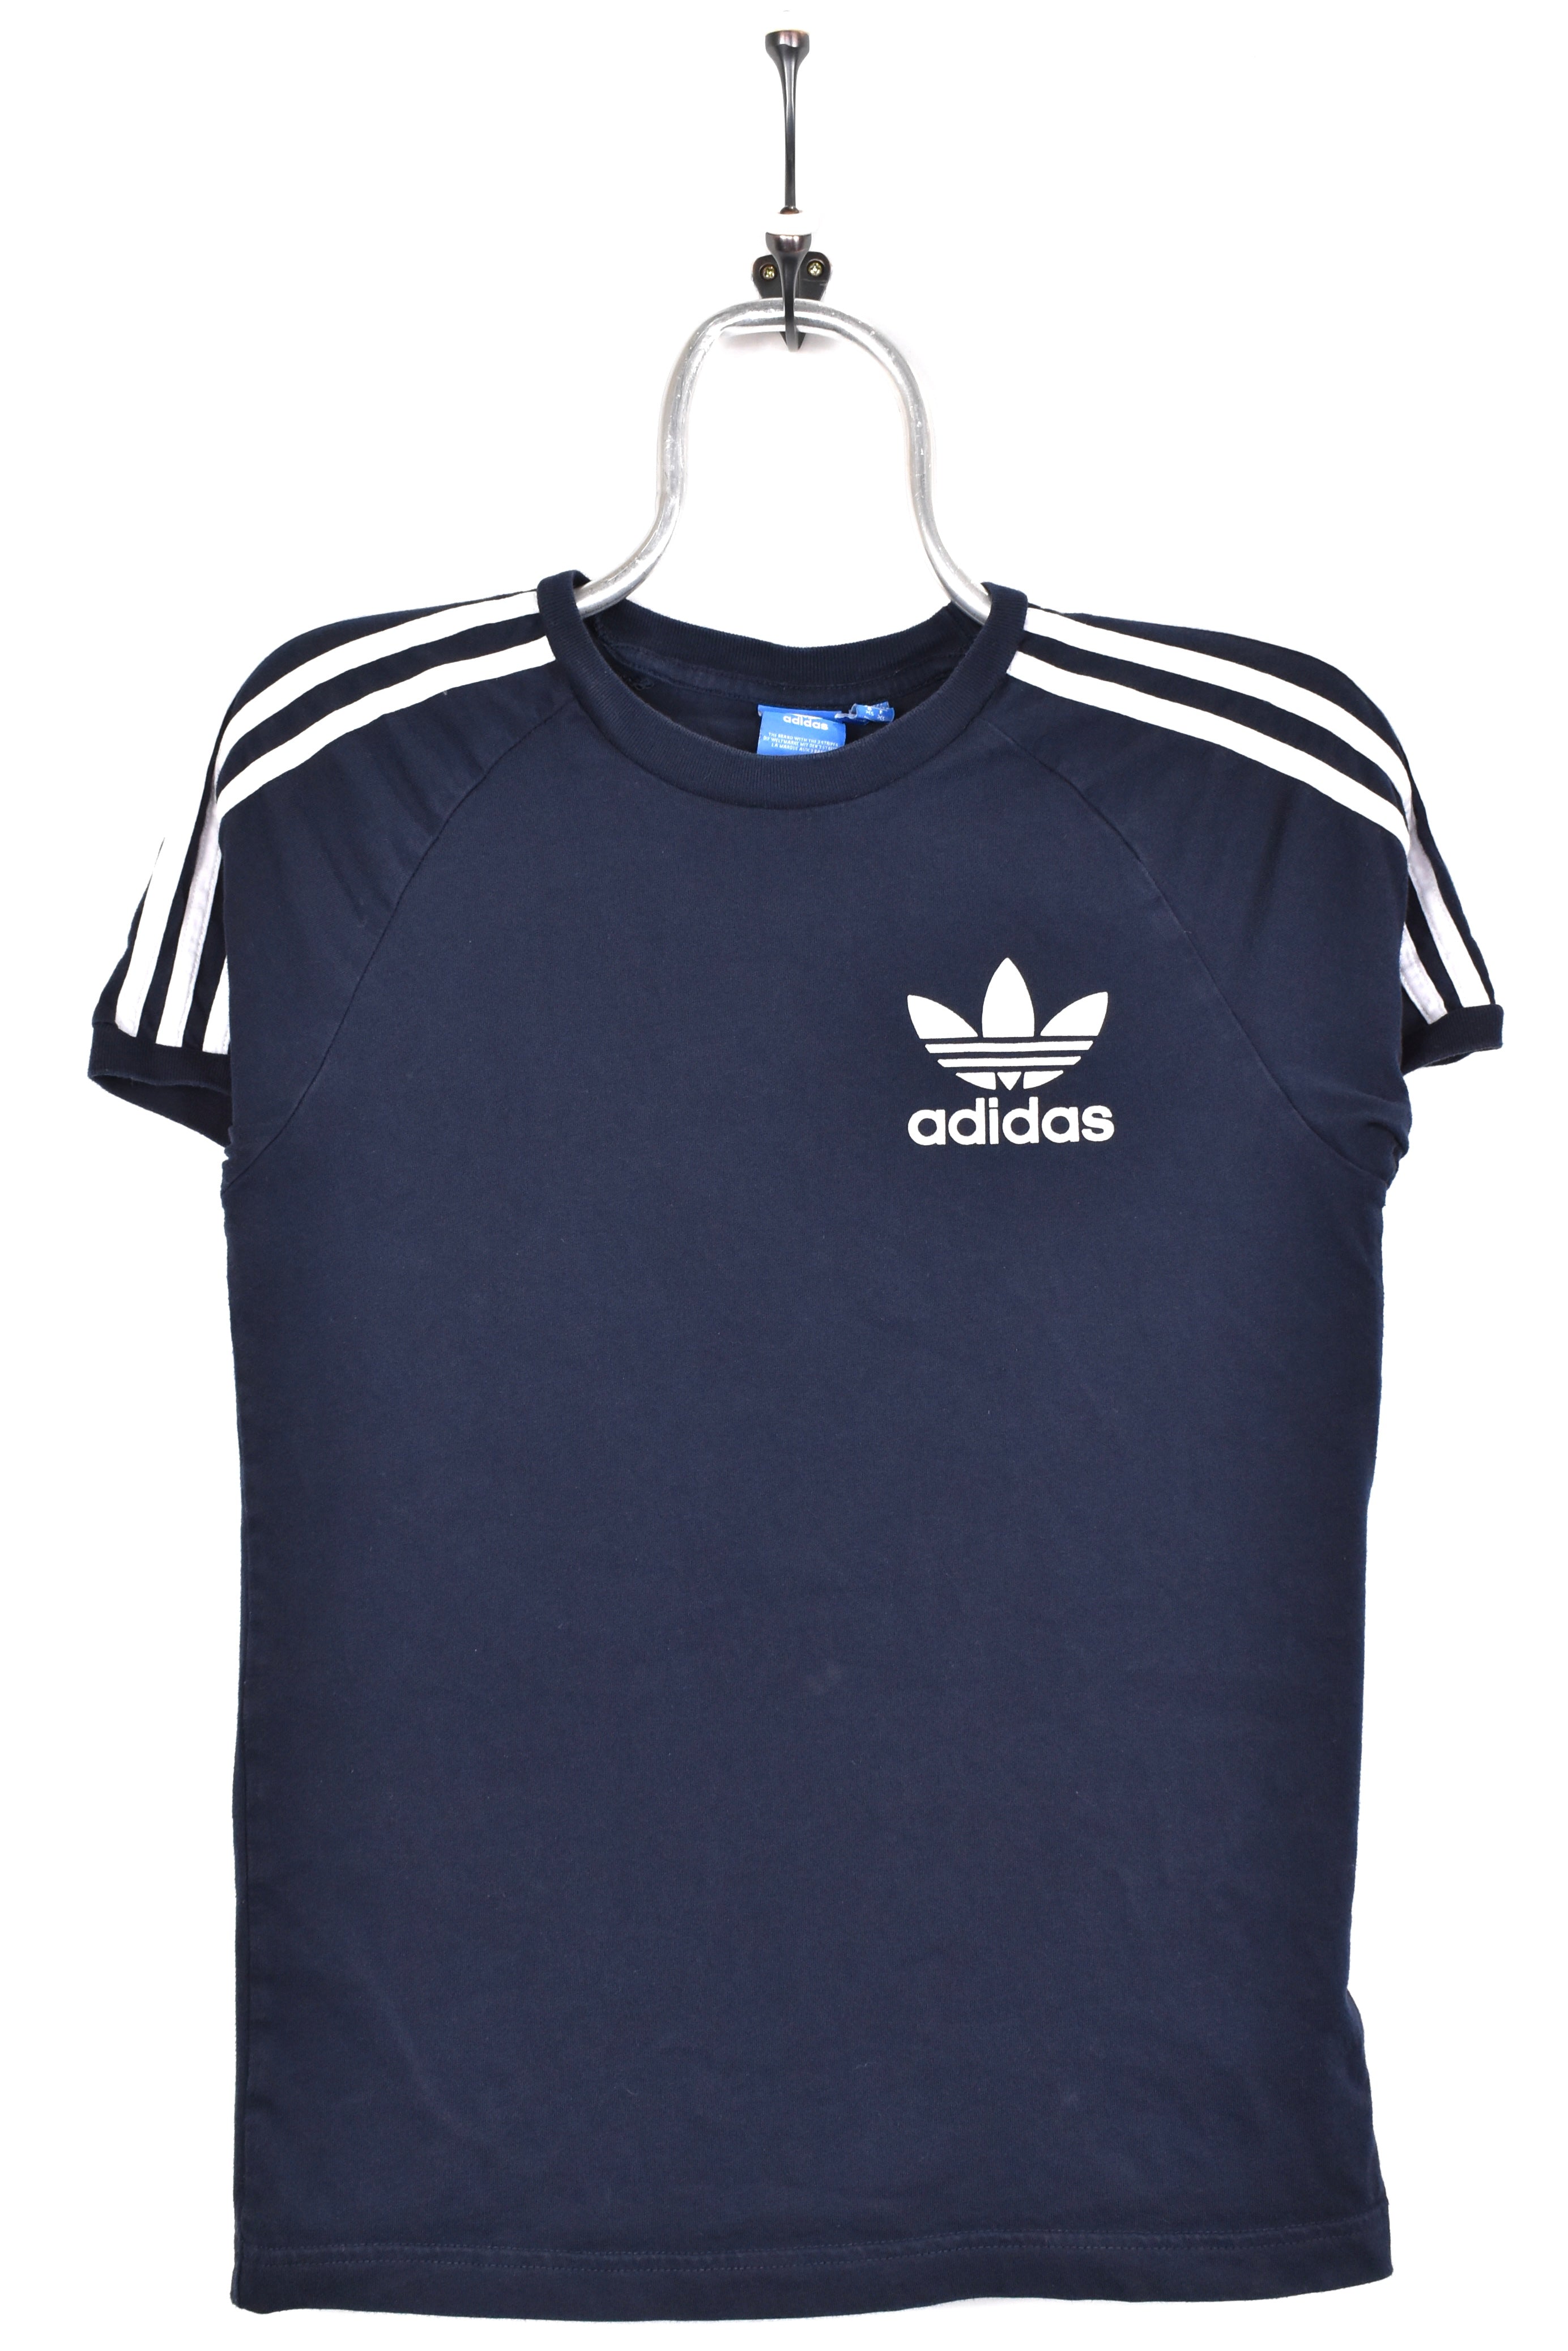 Women's modern Adidas shirt, blue graphic tee - AU XS ADIDAS